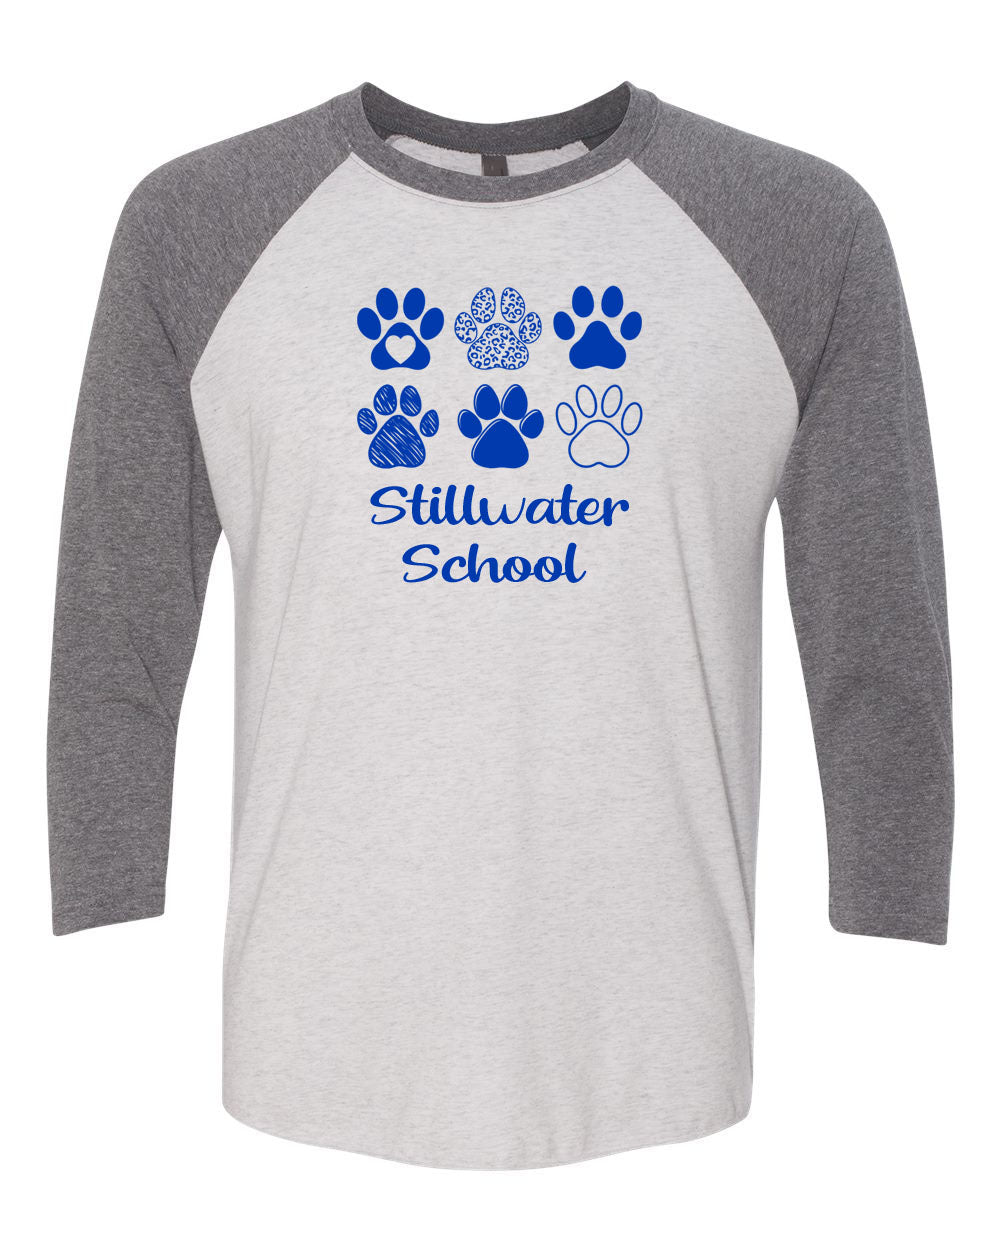 Stillwater Design 20 raglan shirt